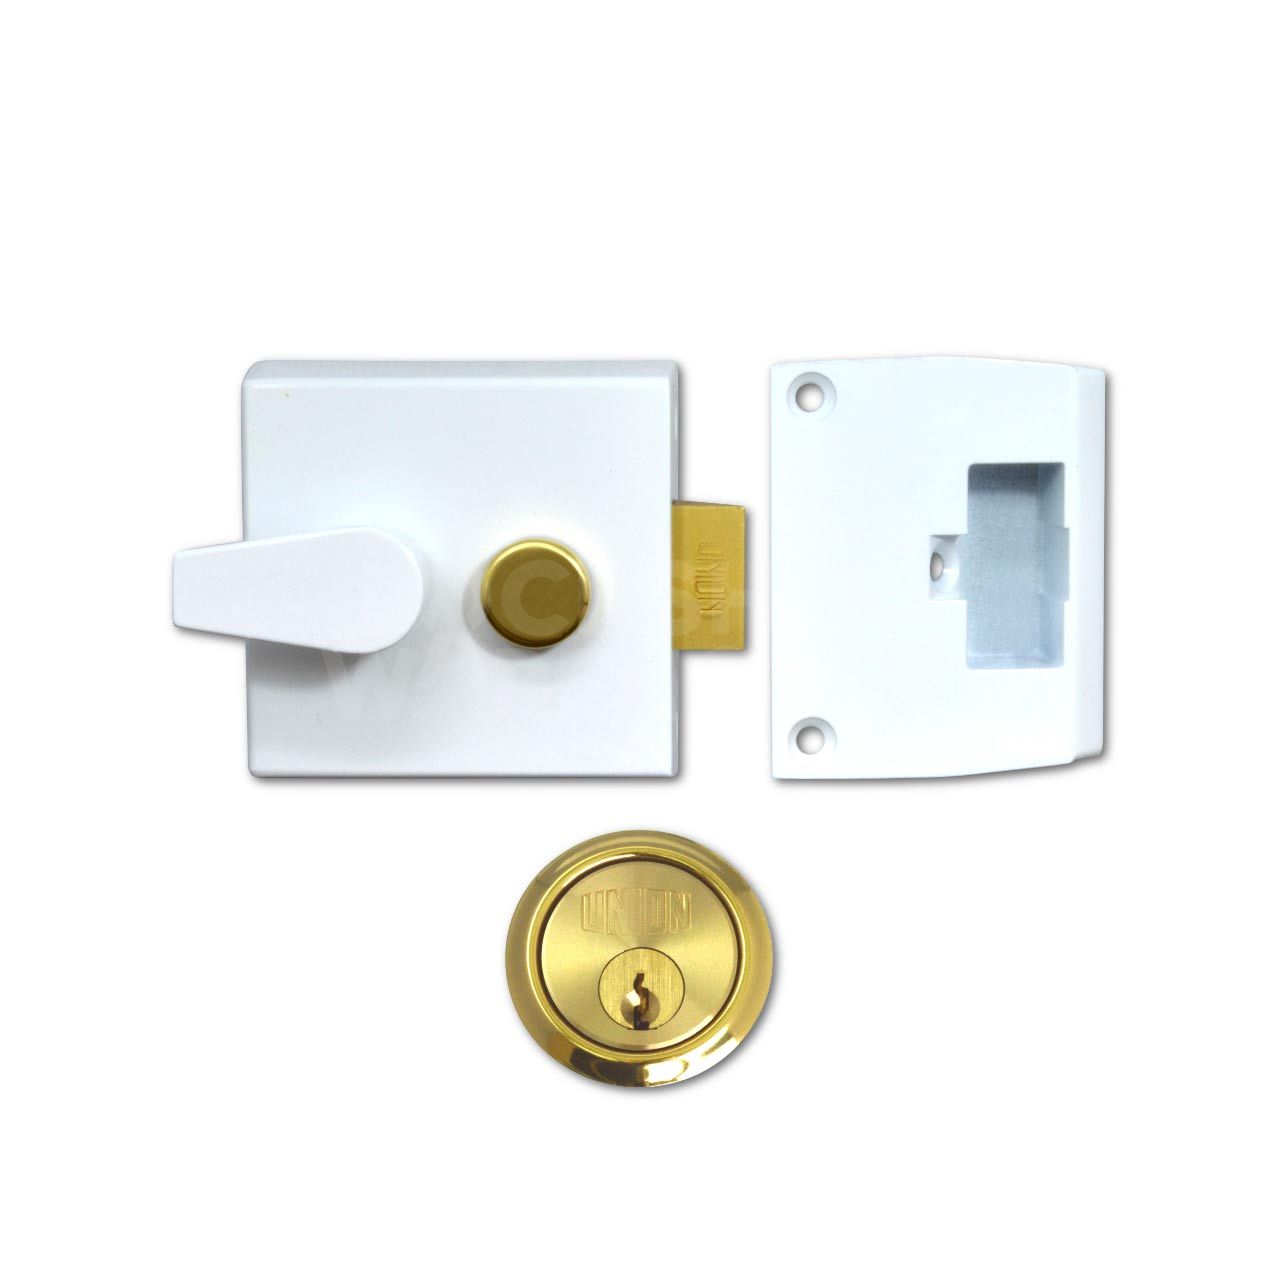 Dimensions Image: Union 1027 Standard Security Rim Lock 40mm